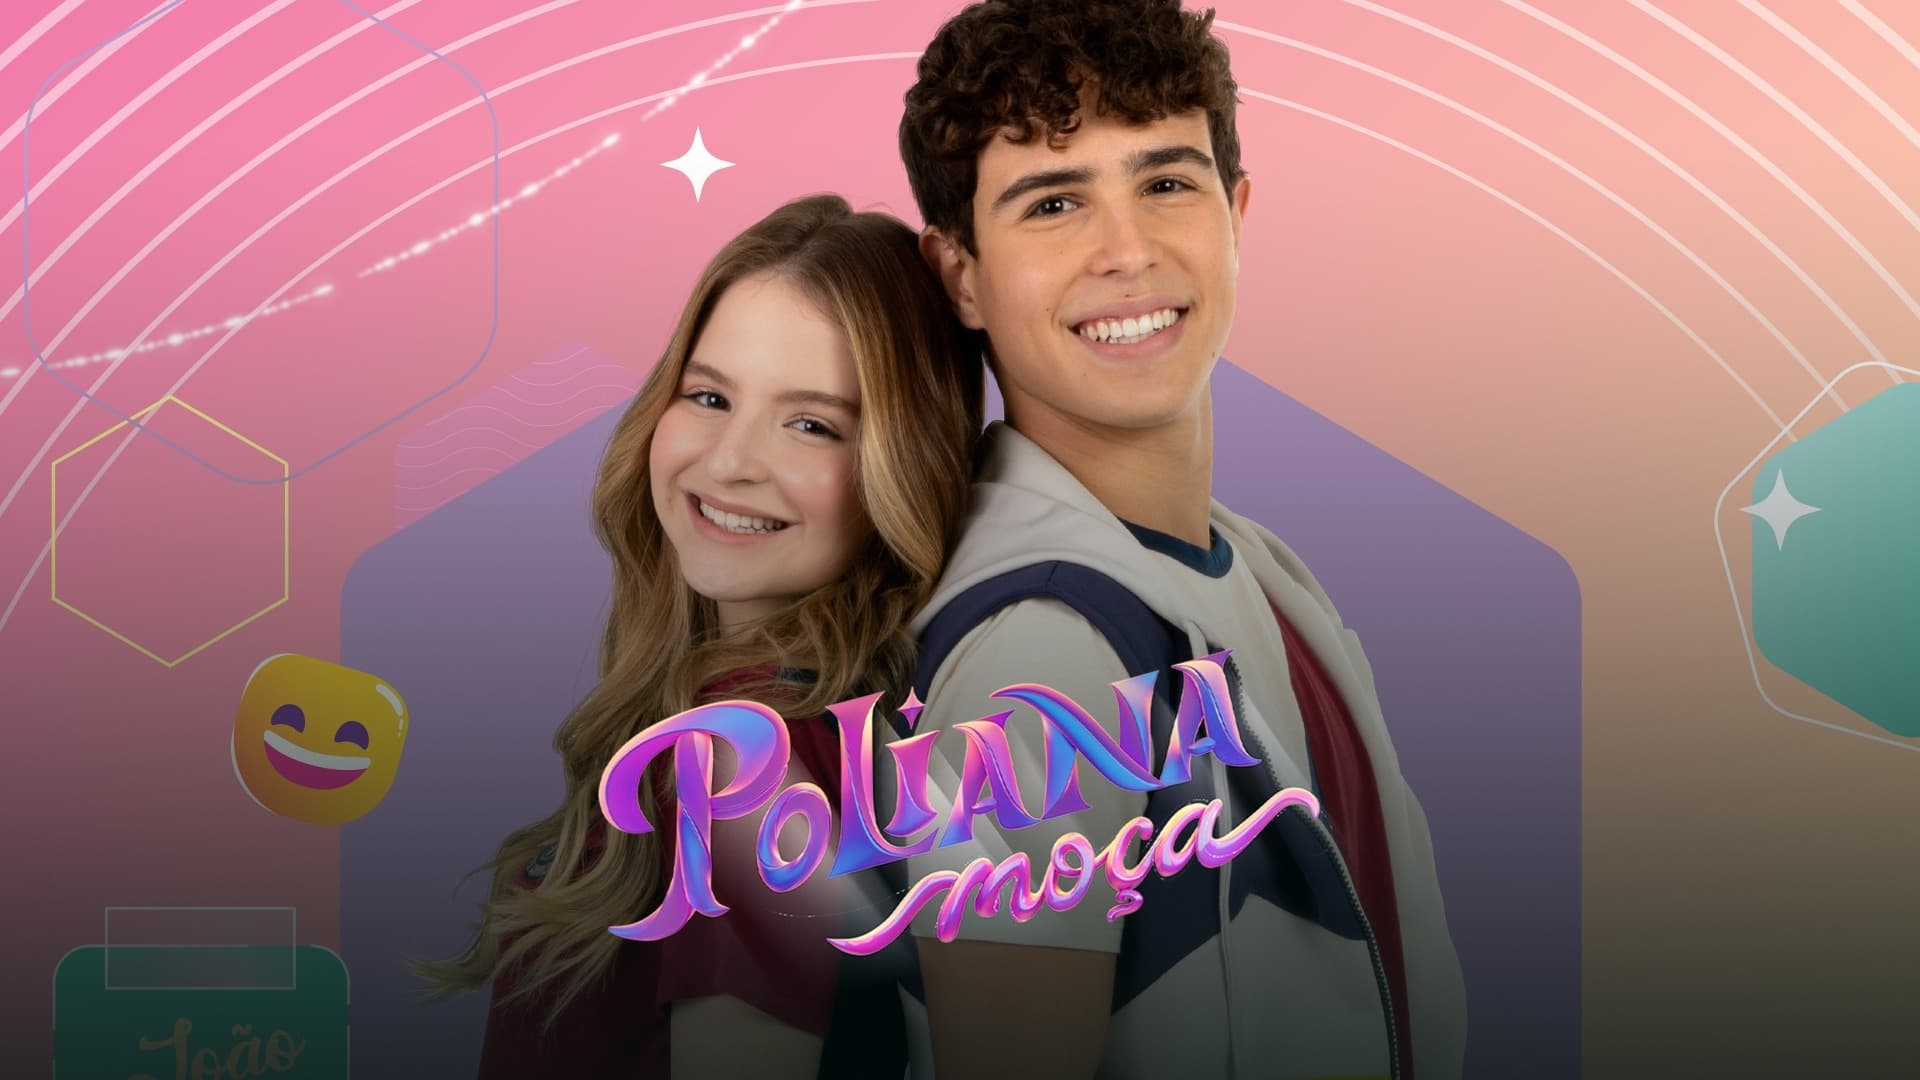 Poliana Moça - Season 1 Episode 301 : Episode 301